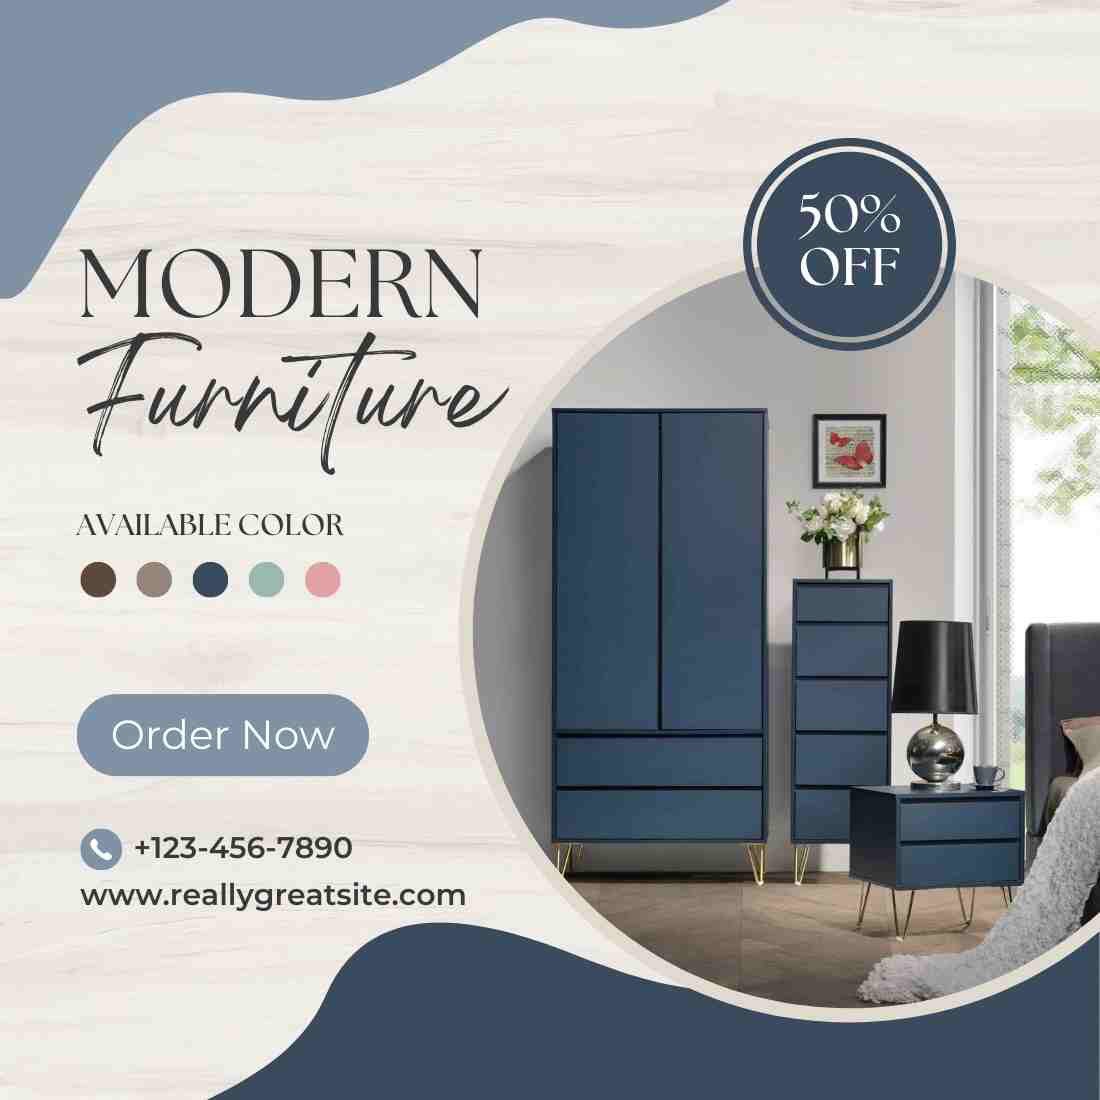 Instagram design template showcasing modern furniture preview image.